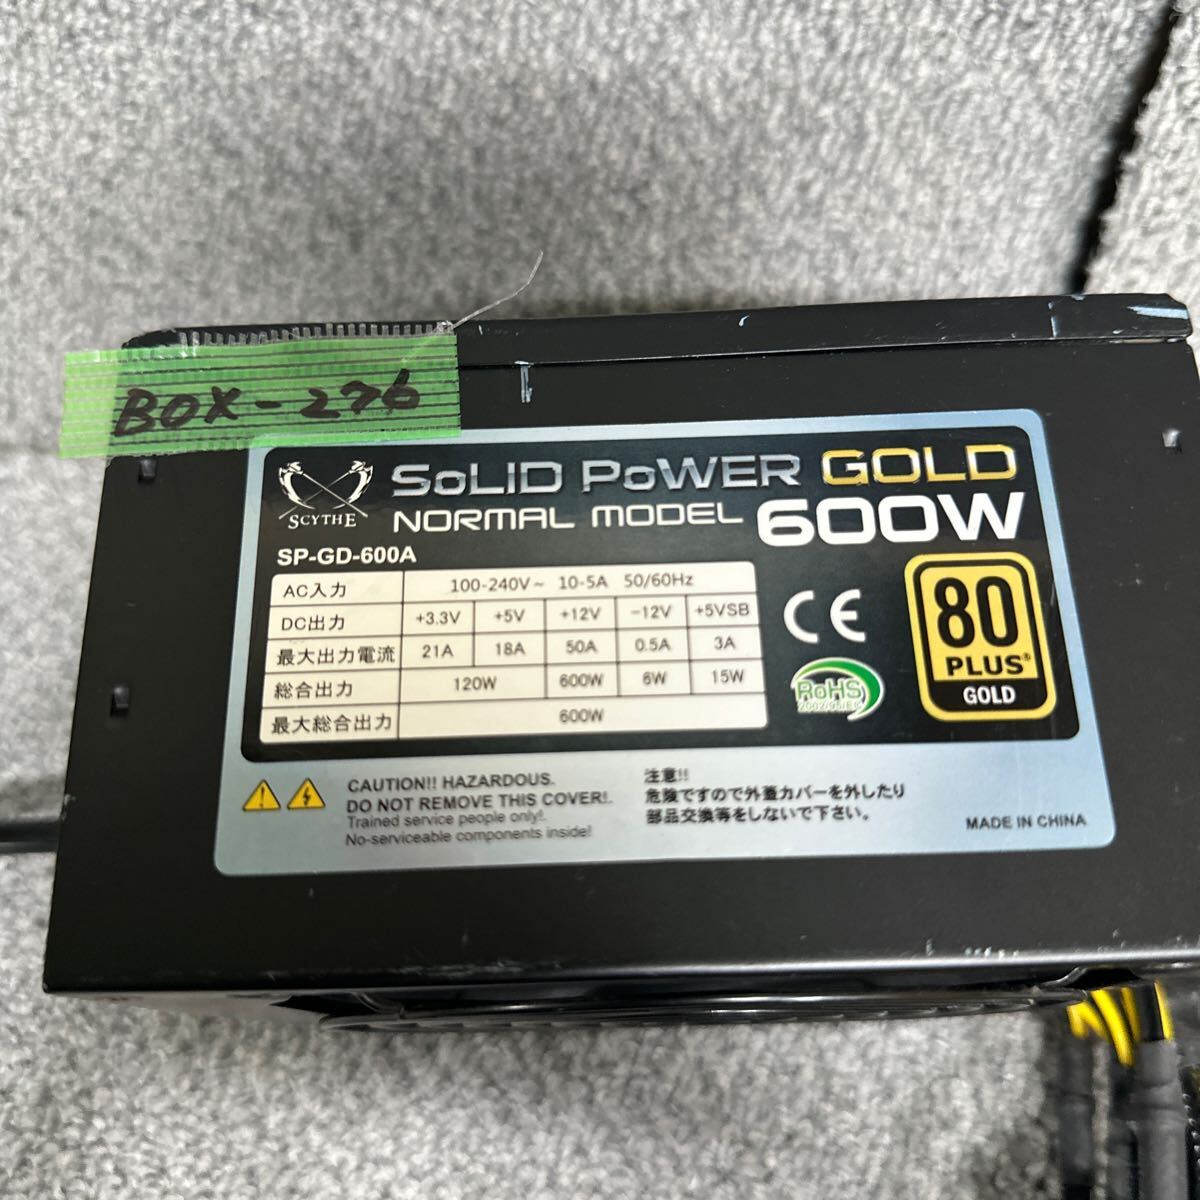 GK 激安 BOX-276 PC 電源BOX SCYTHE SOLID POWER GOLD NORMAL MODEL SP-GD-600A 600W 80PLUS GOLD 電源ユニット 電圧確認済み 中古品_画像2